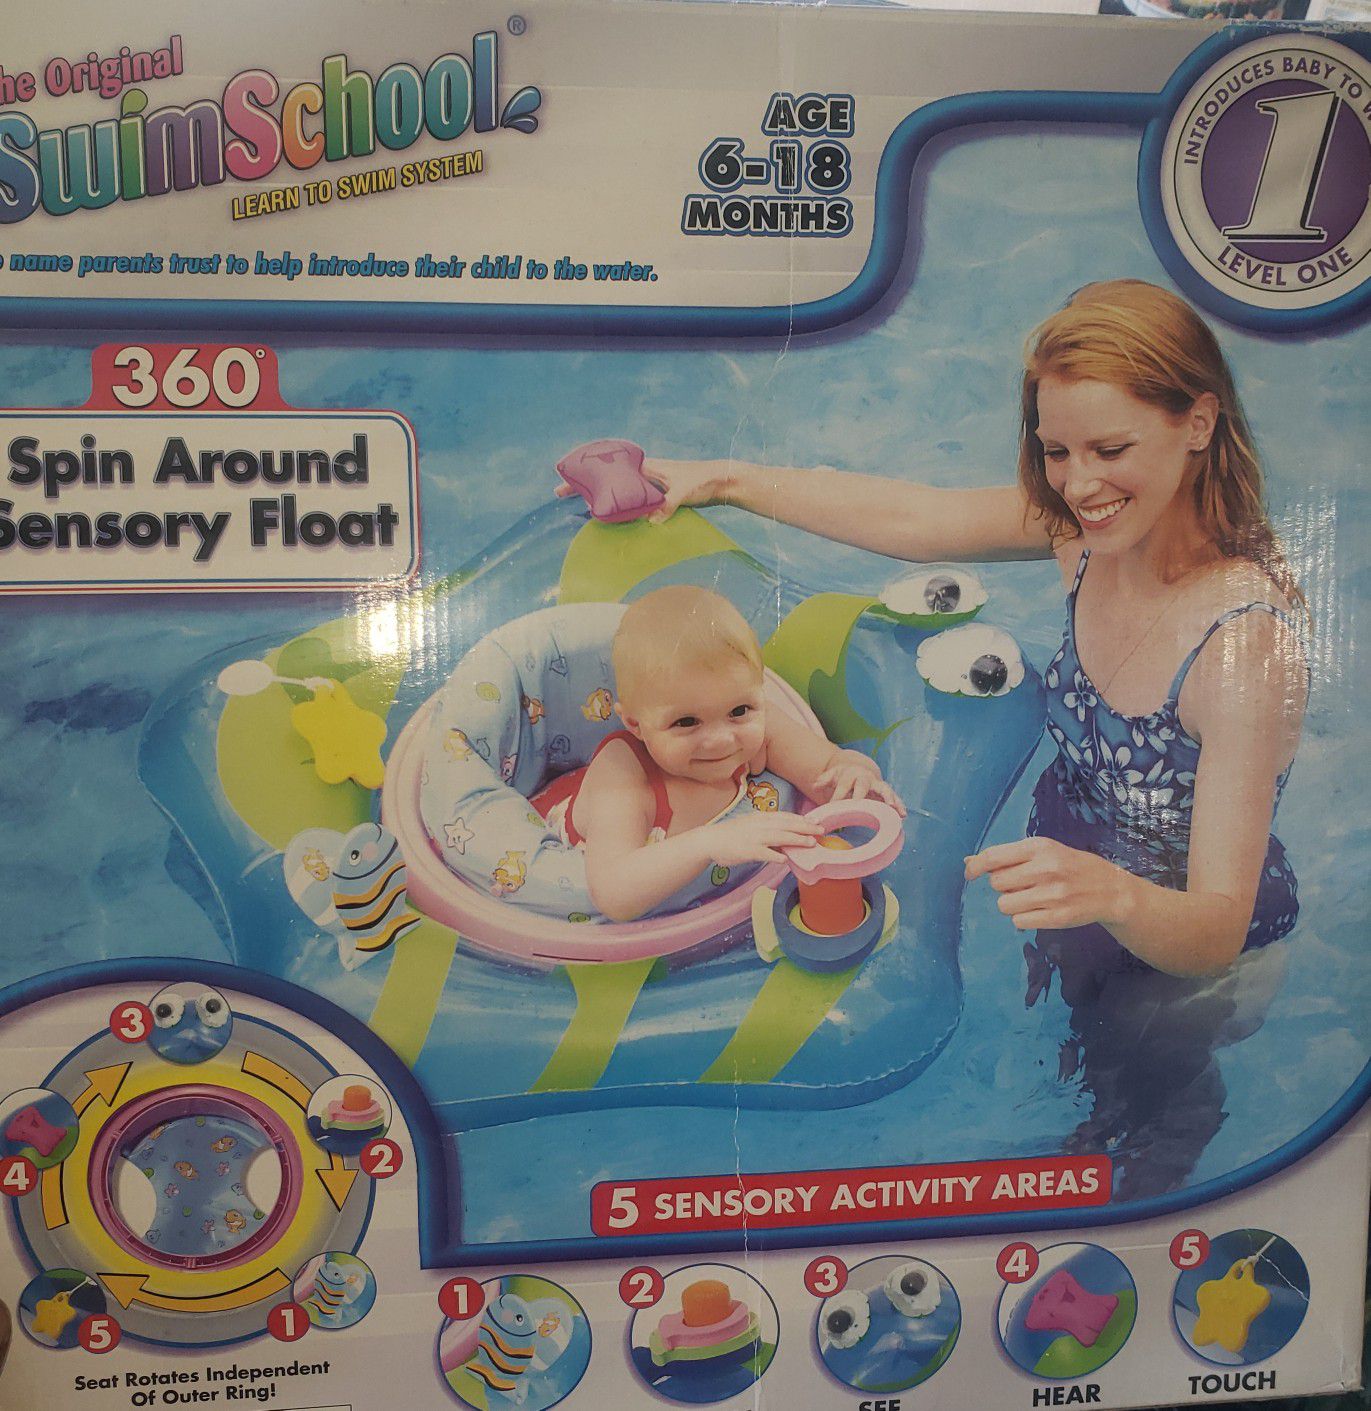 Spin Around Sensory float